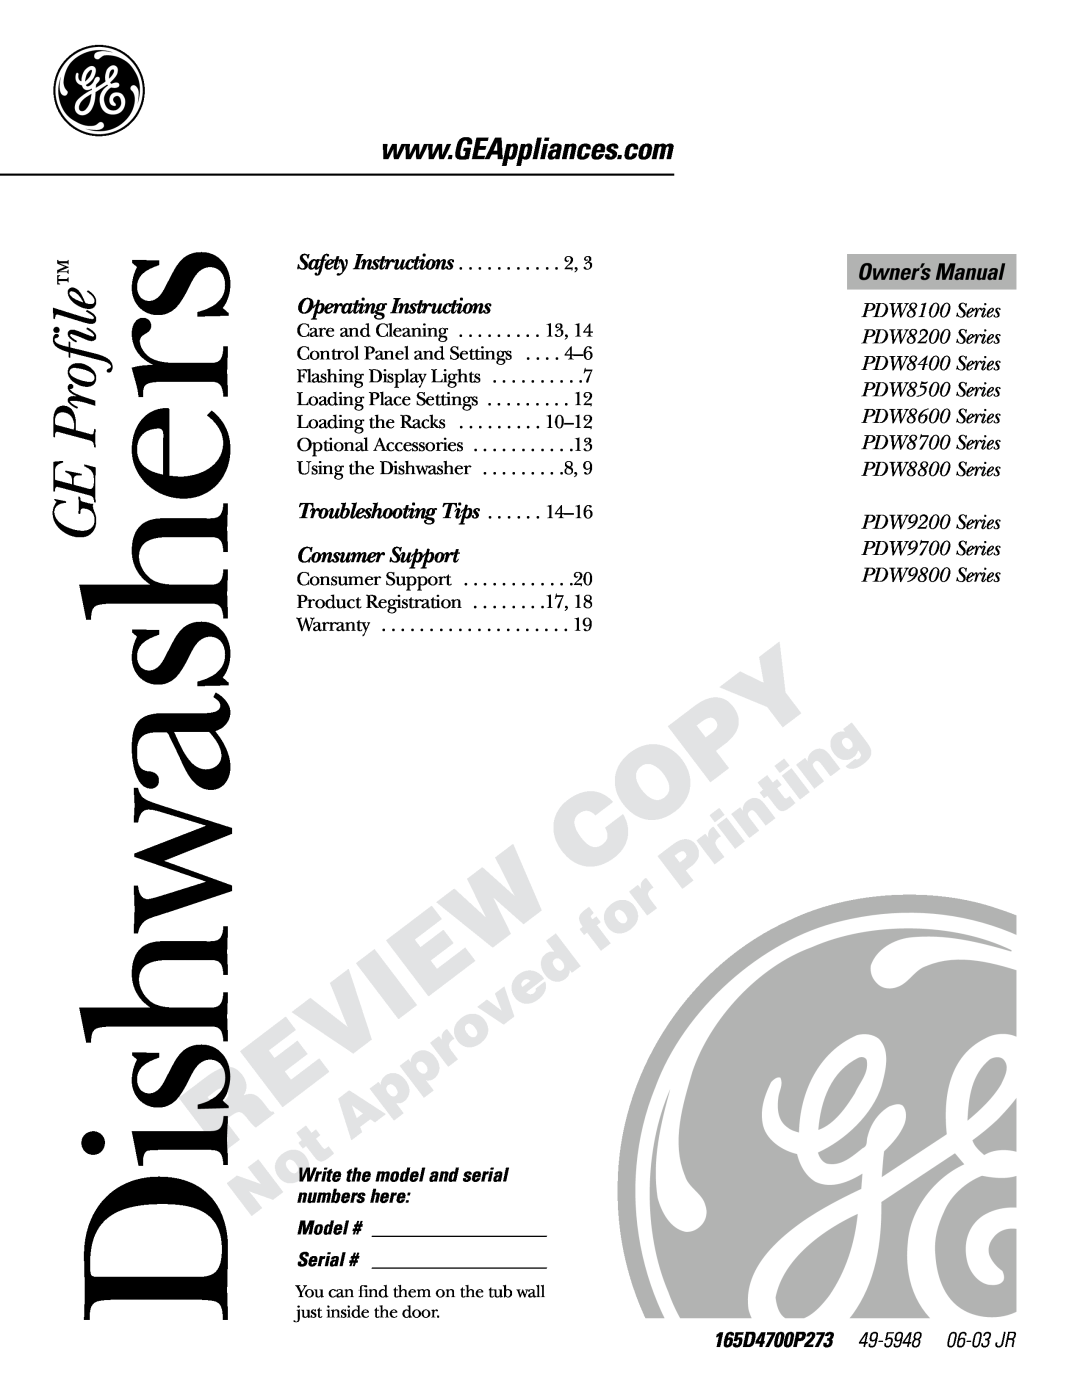 GE PDW8400 Series manual 165D4700P273 49-5948 06-03 JR, Write the model and serial numbers here Model # Serial # 